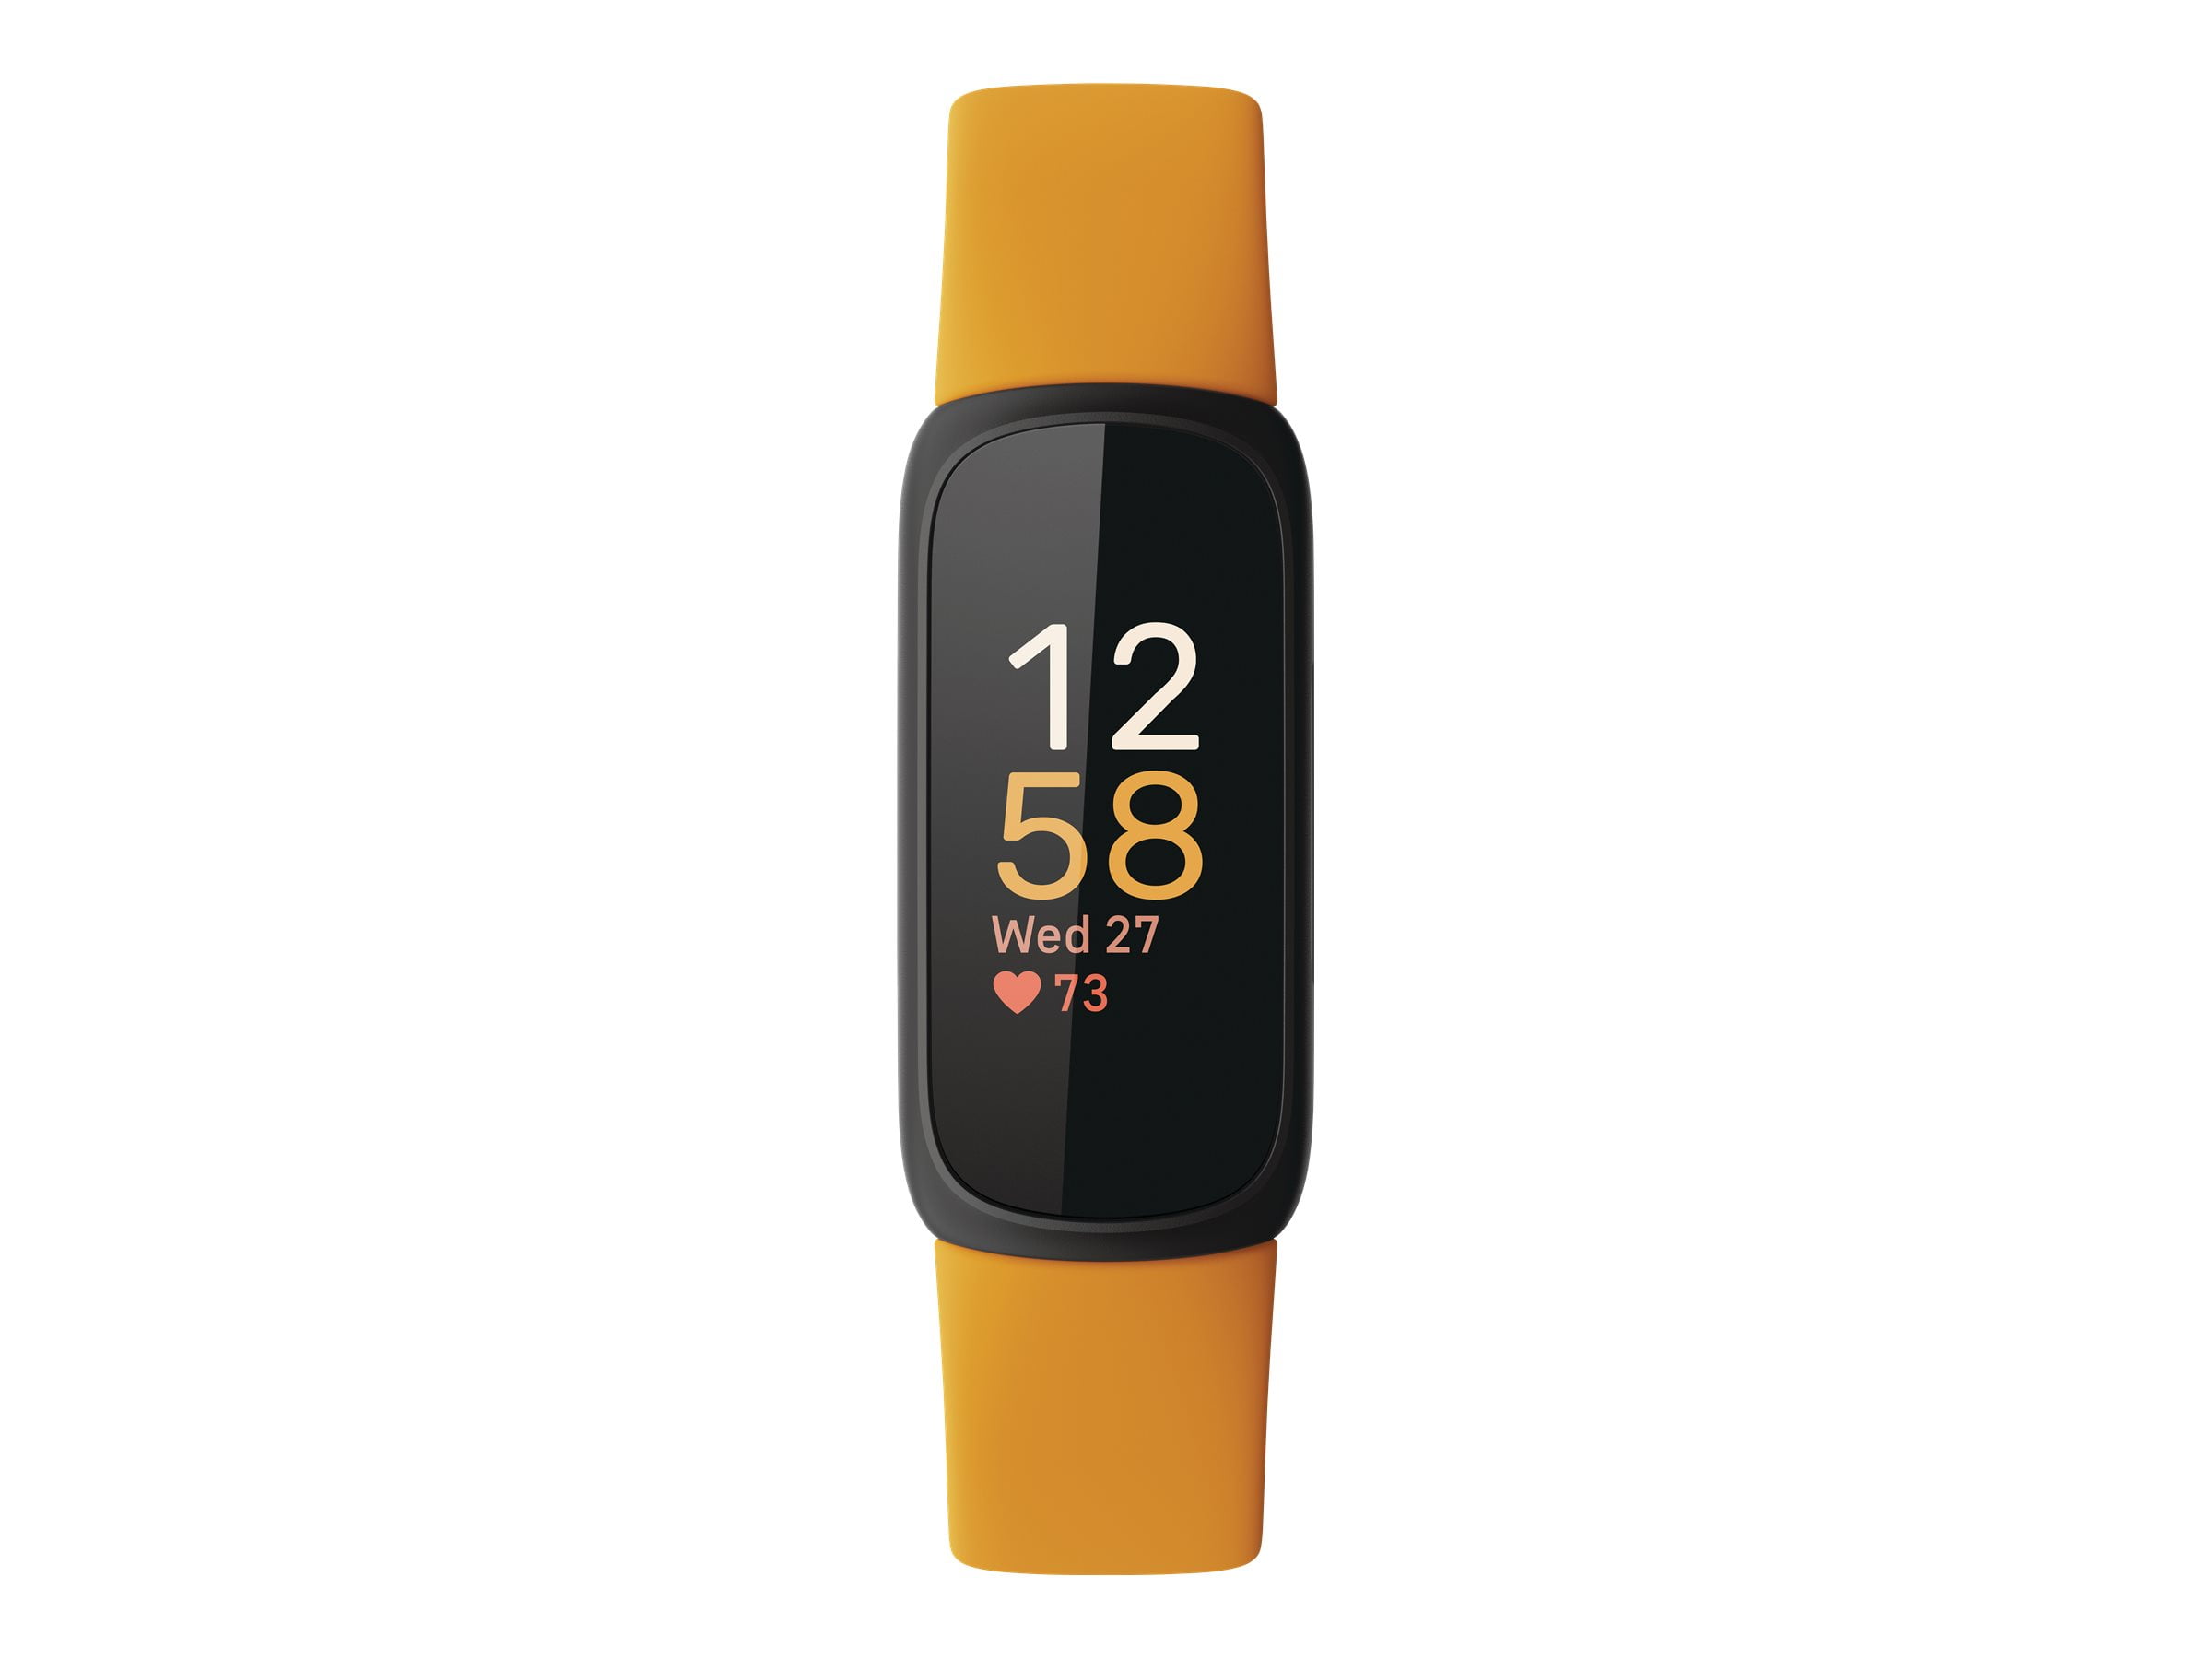 Fitbit Inspire 3 Health & Fitness Tracker - Lilac Bliss - Walmart.com